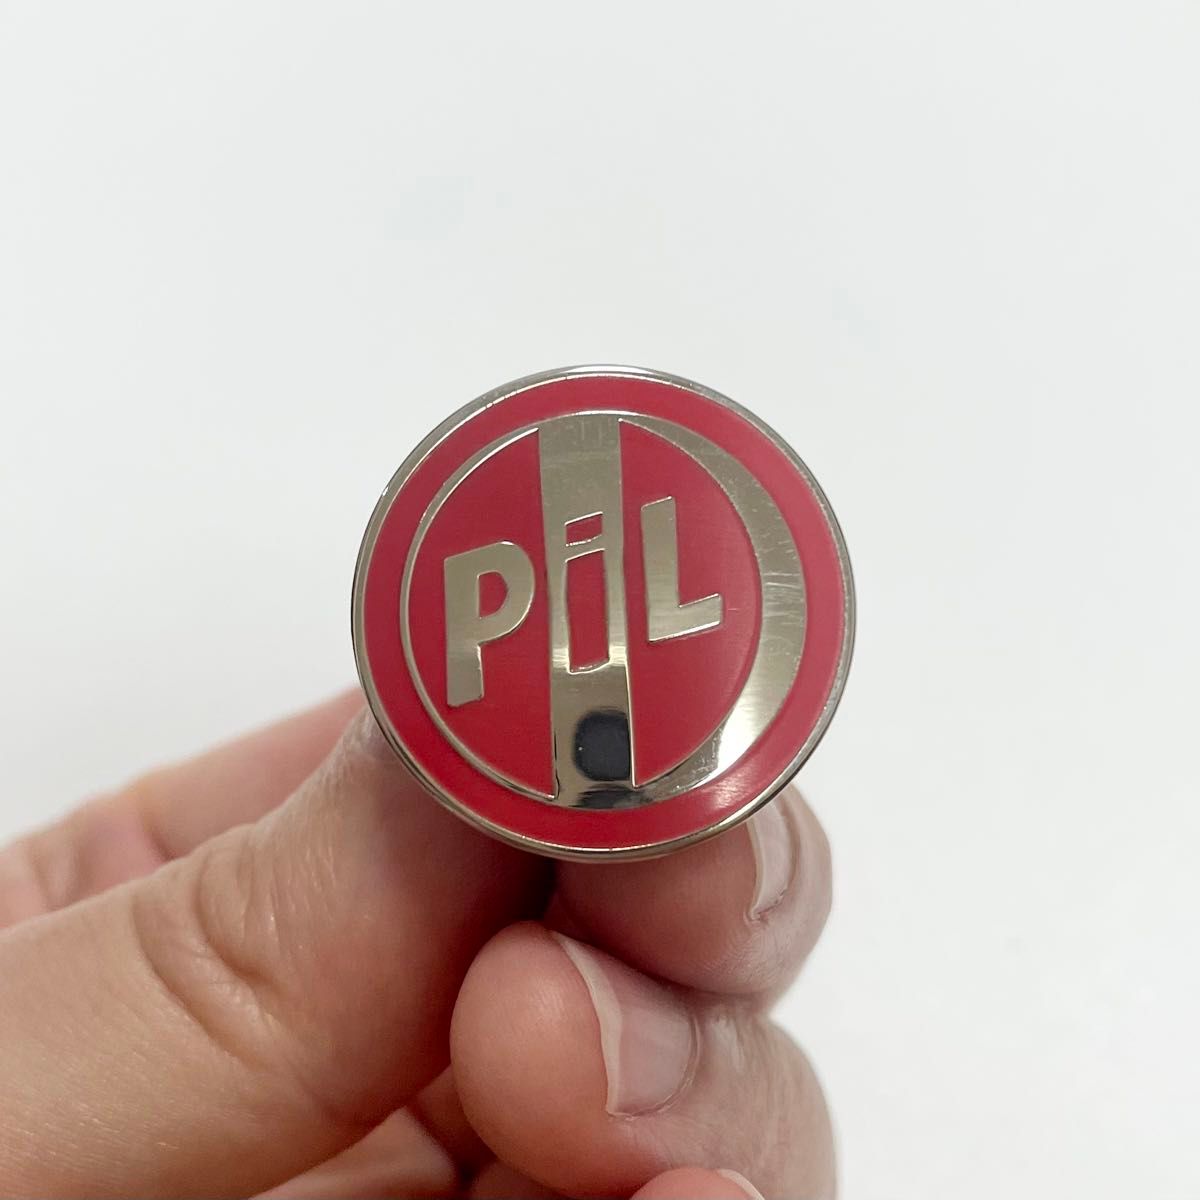 Public Image Ltd ピンバッジ パブリックイメージリミテッド Pins